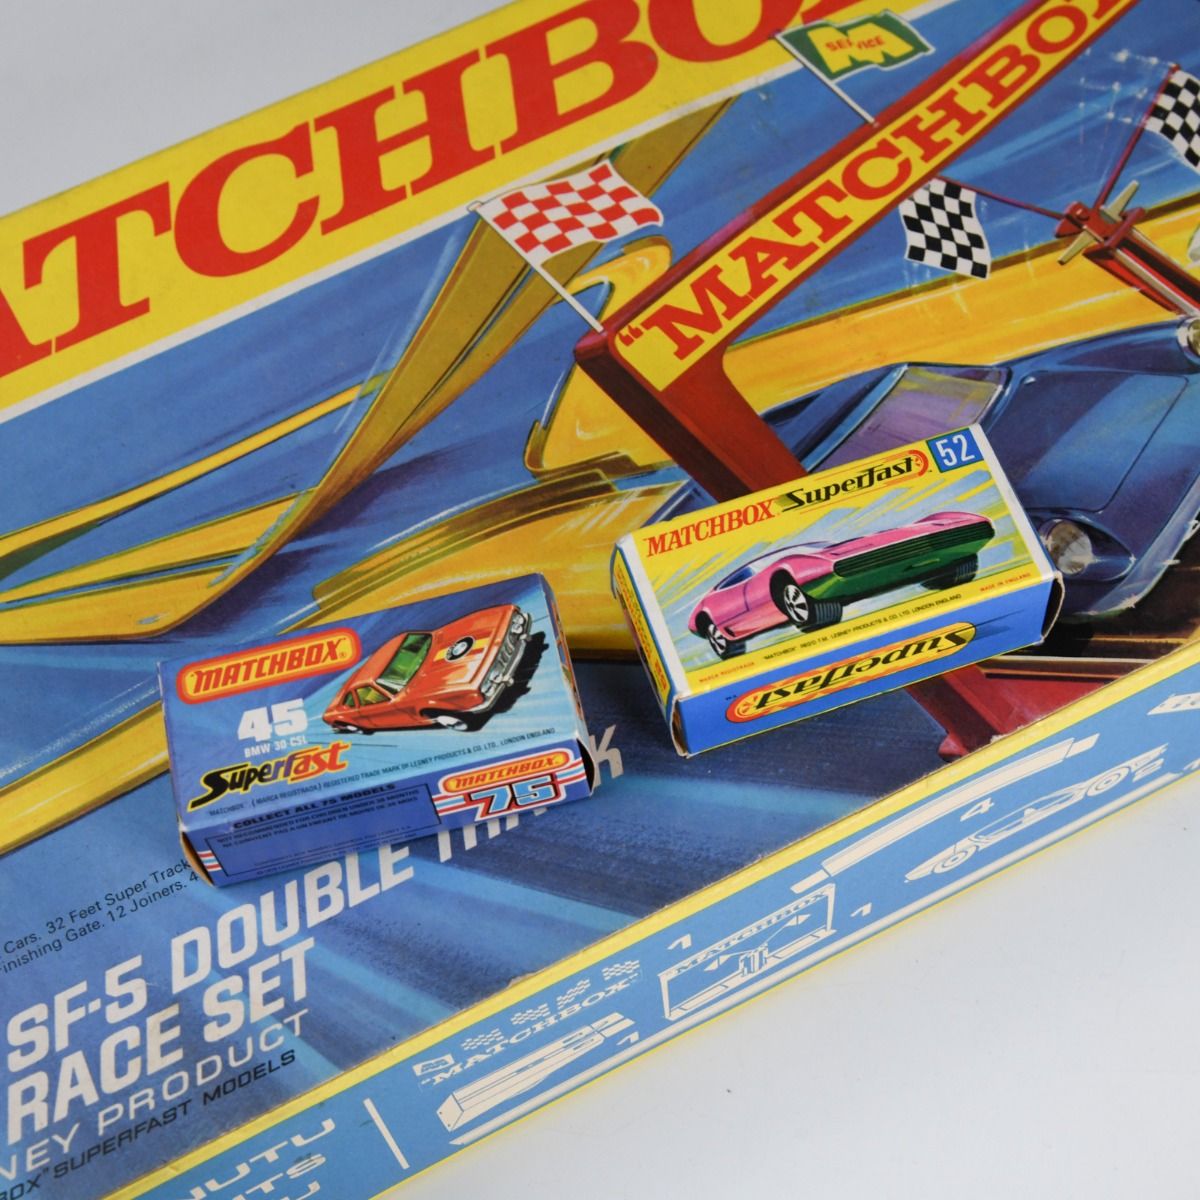 Matchbox Superfast SF-5 Double Track Race Set